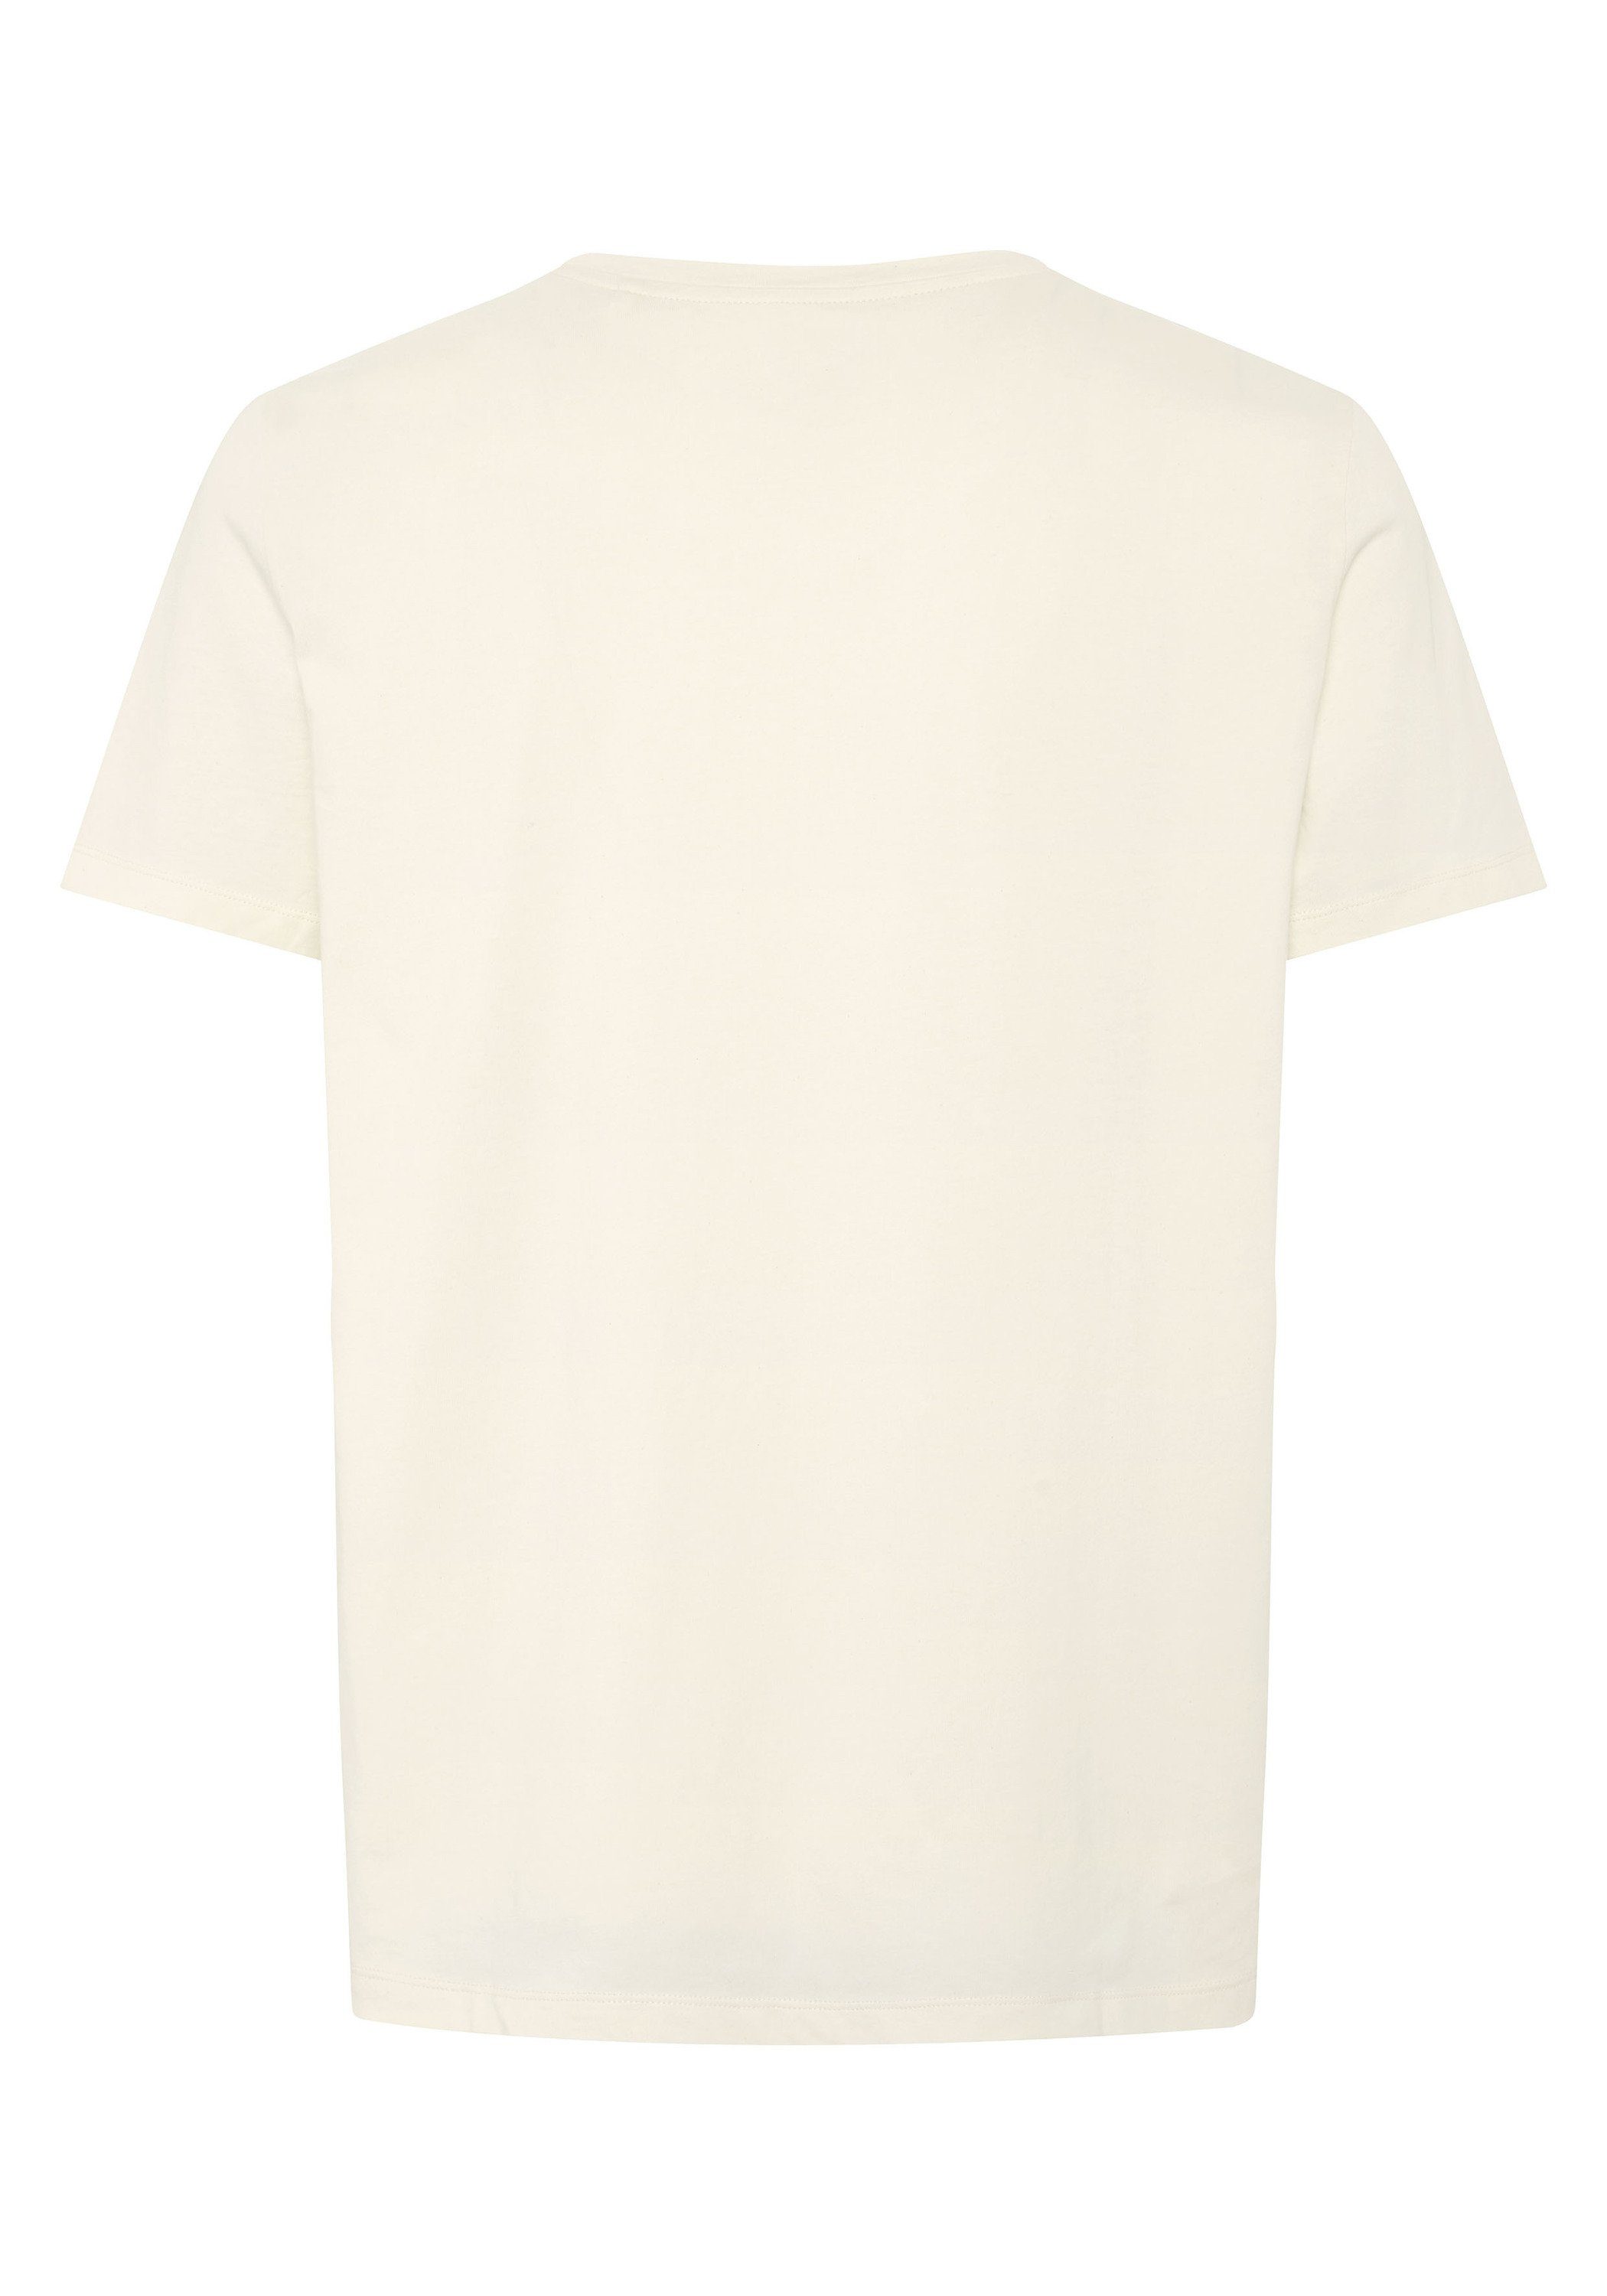 1 Chiemsee Wellenmotiv Natural 12 Print-Shirt T-Shirt mit